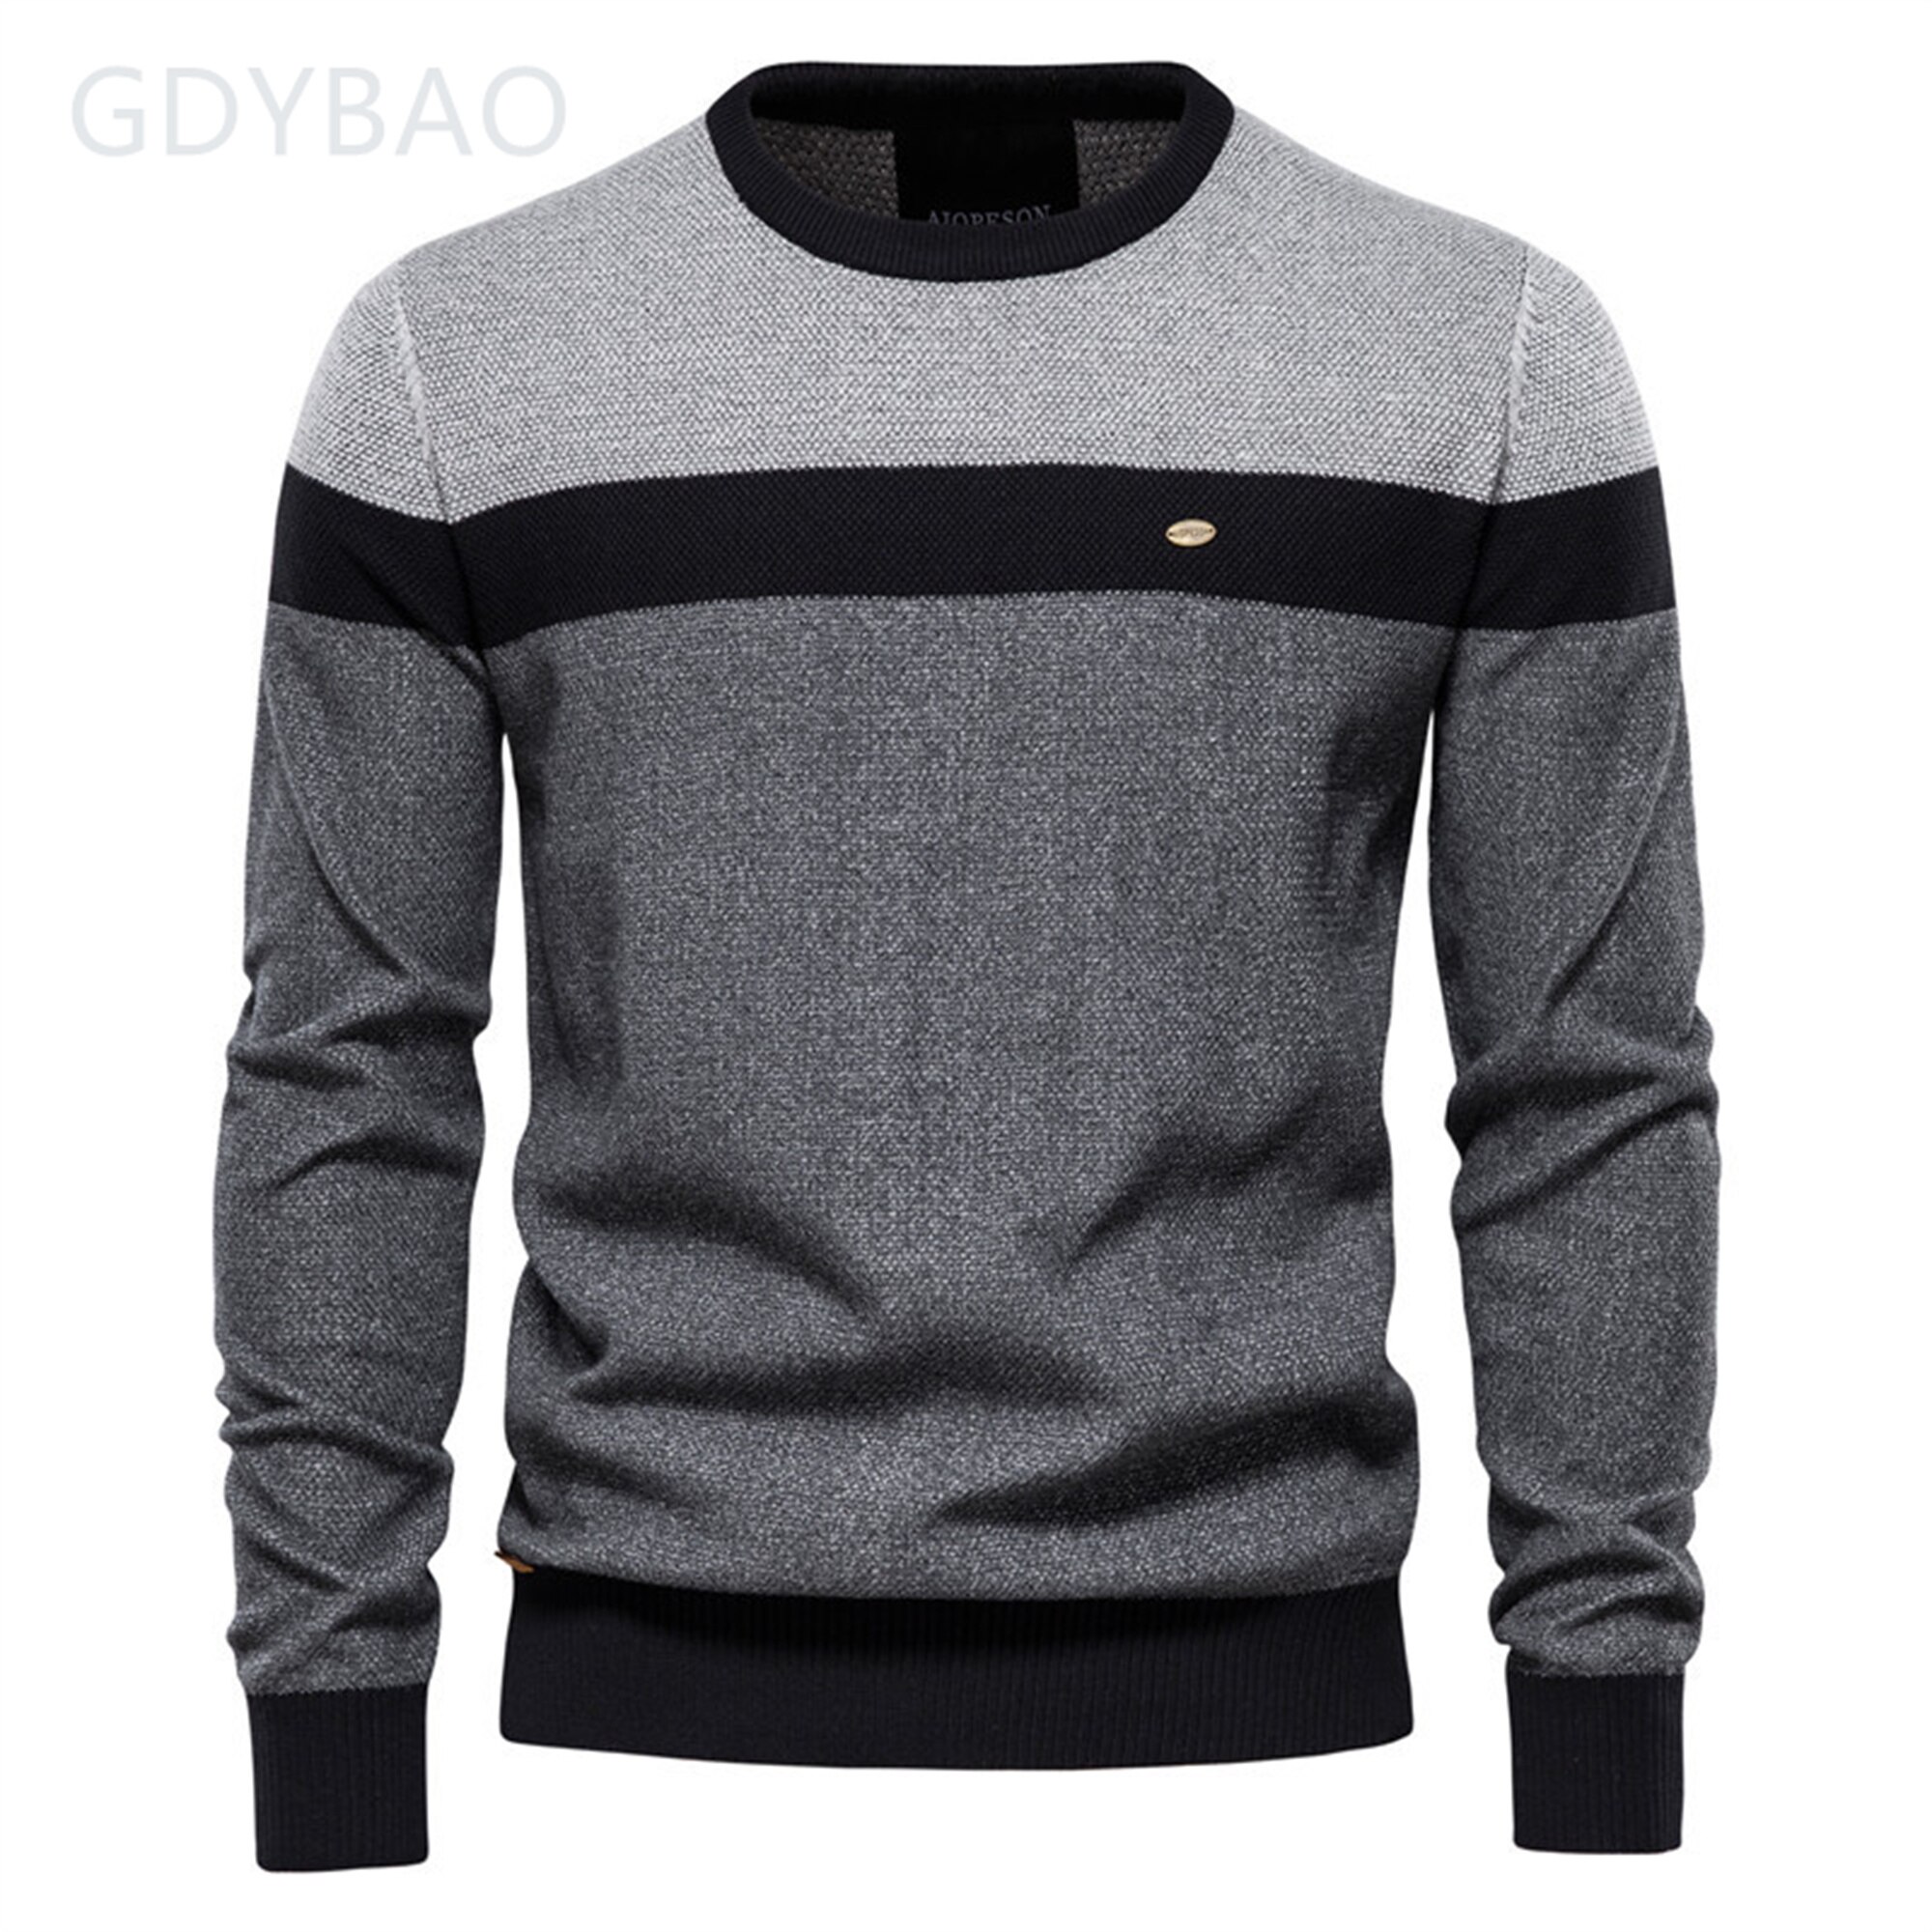 GDDYBAO Spliced Cotton Sweater M..